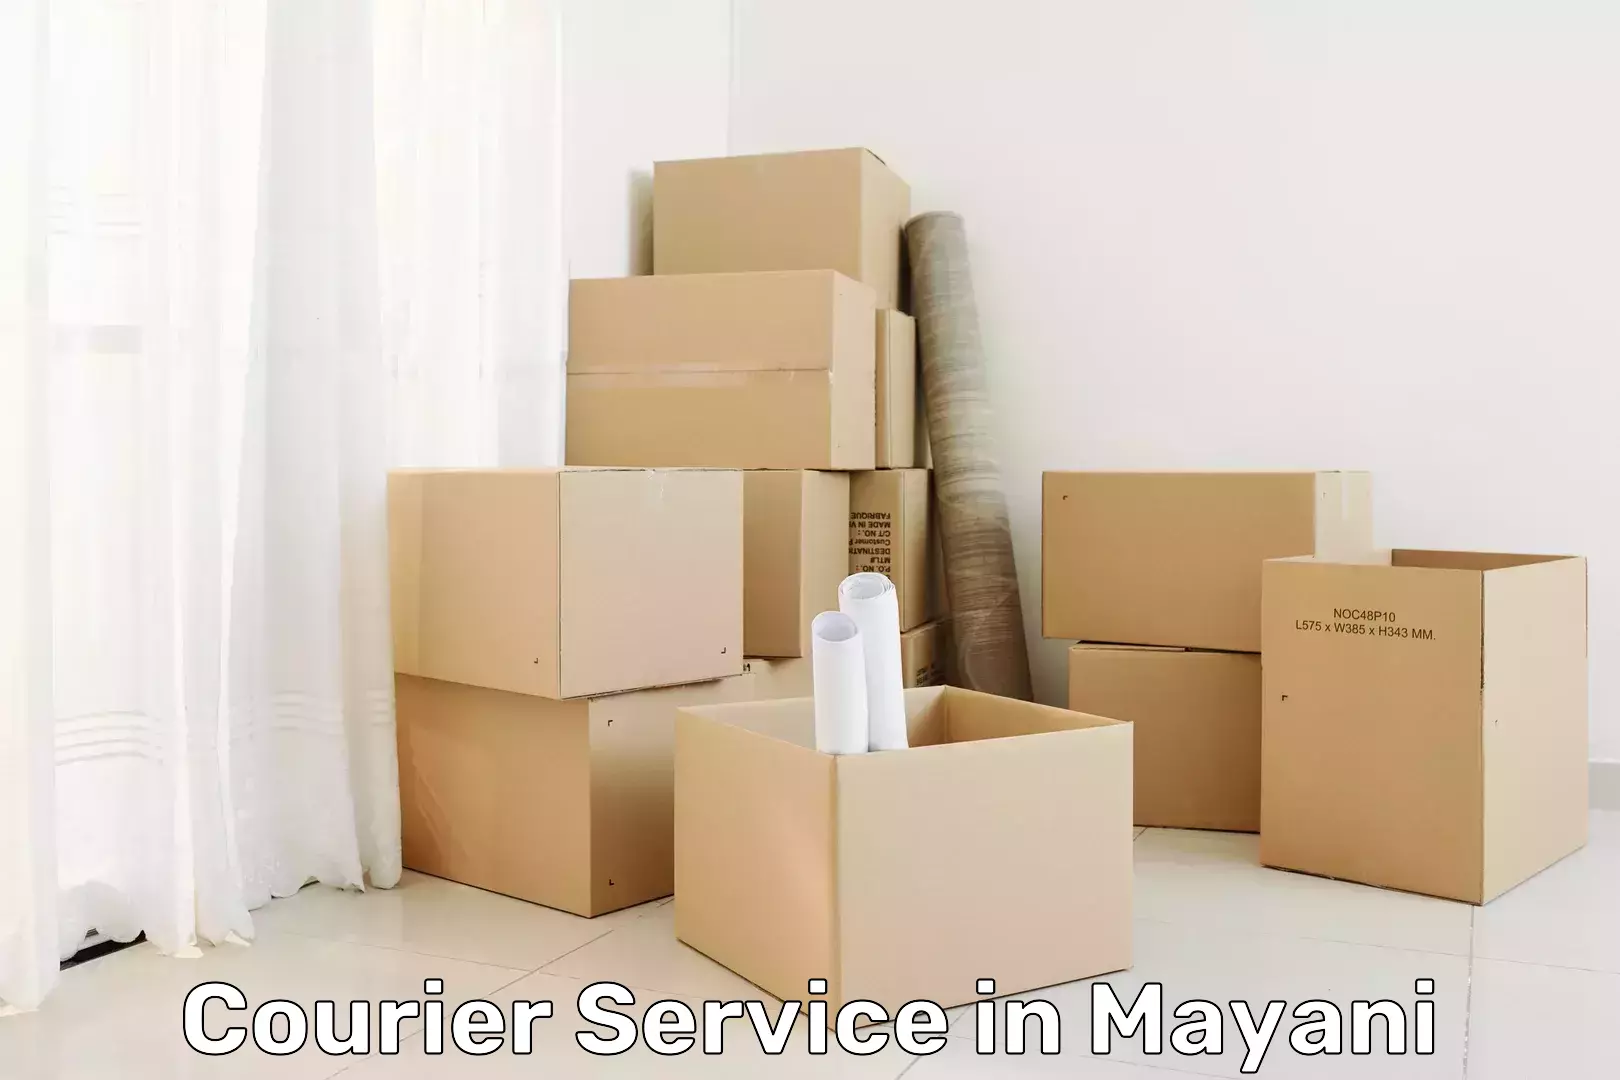 Efficient logistics management in Mayani